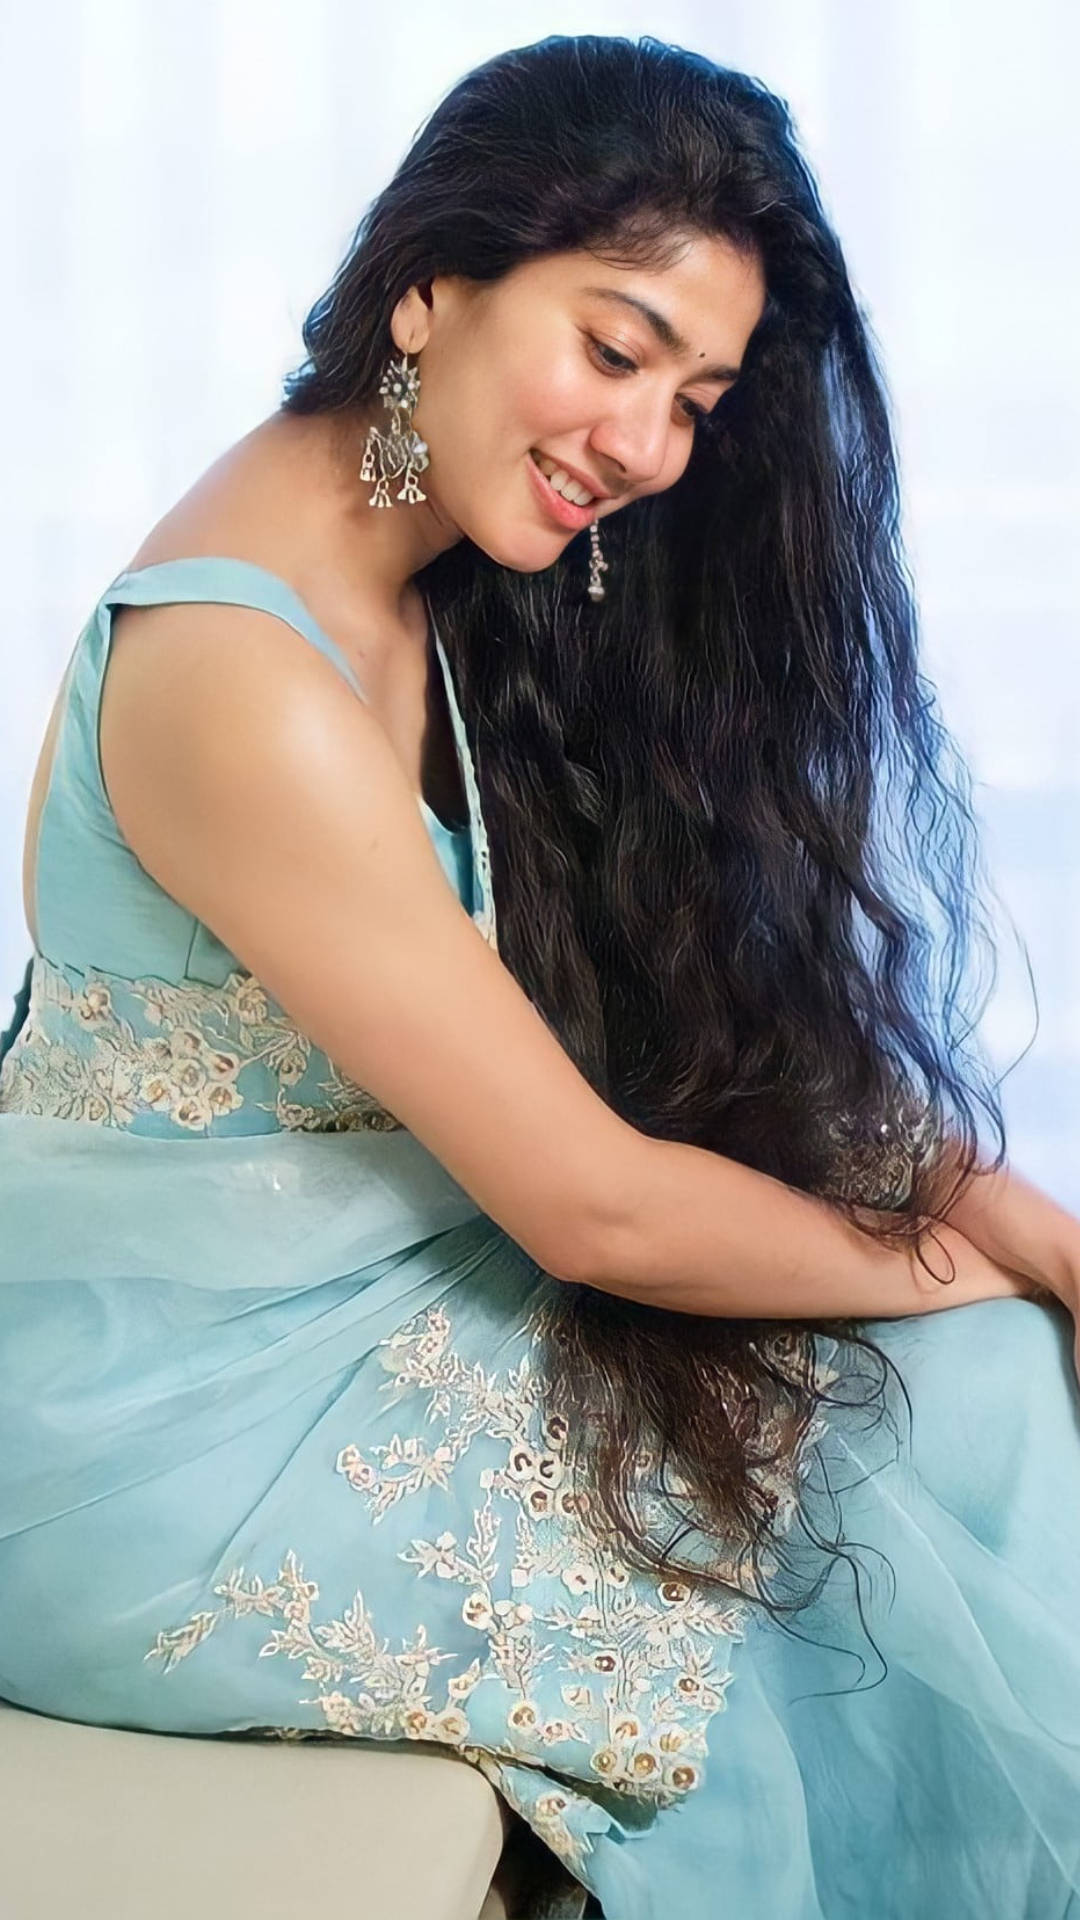 Sai Pallavi In Light Blue Dress Background